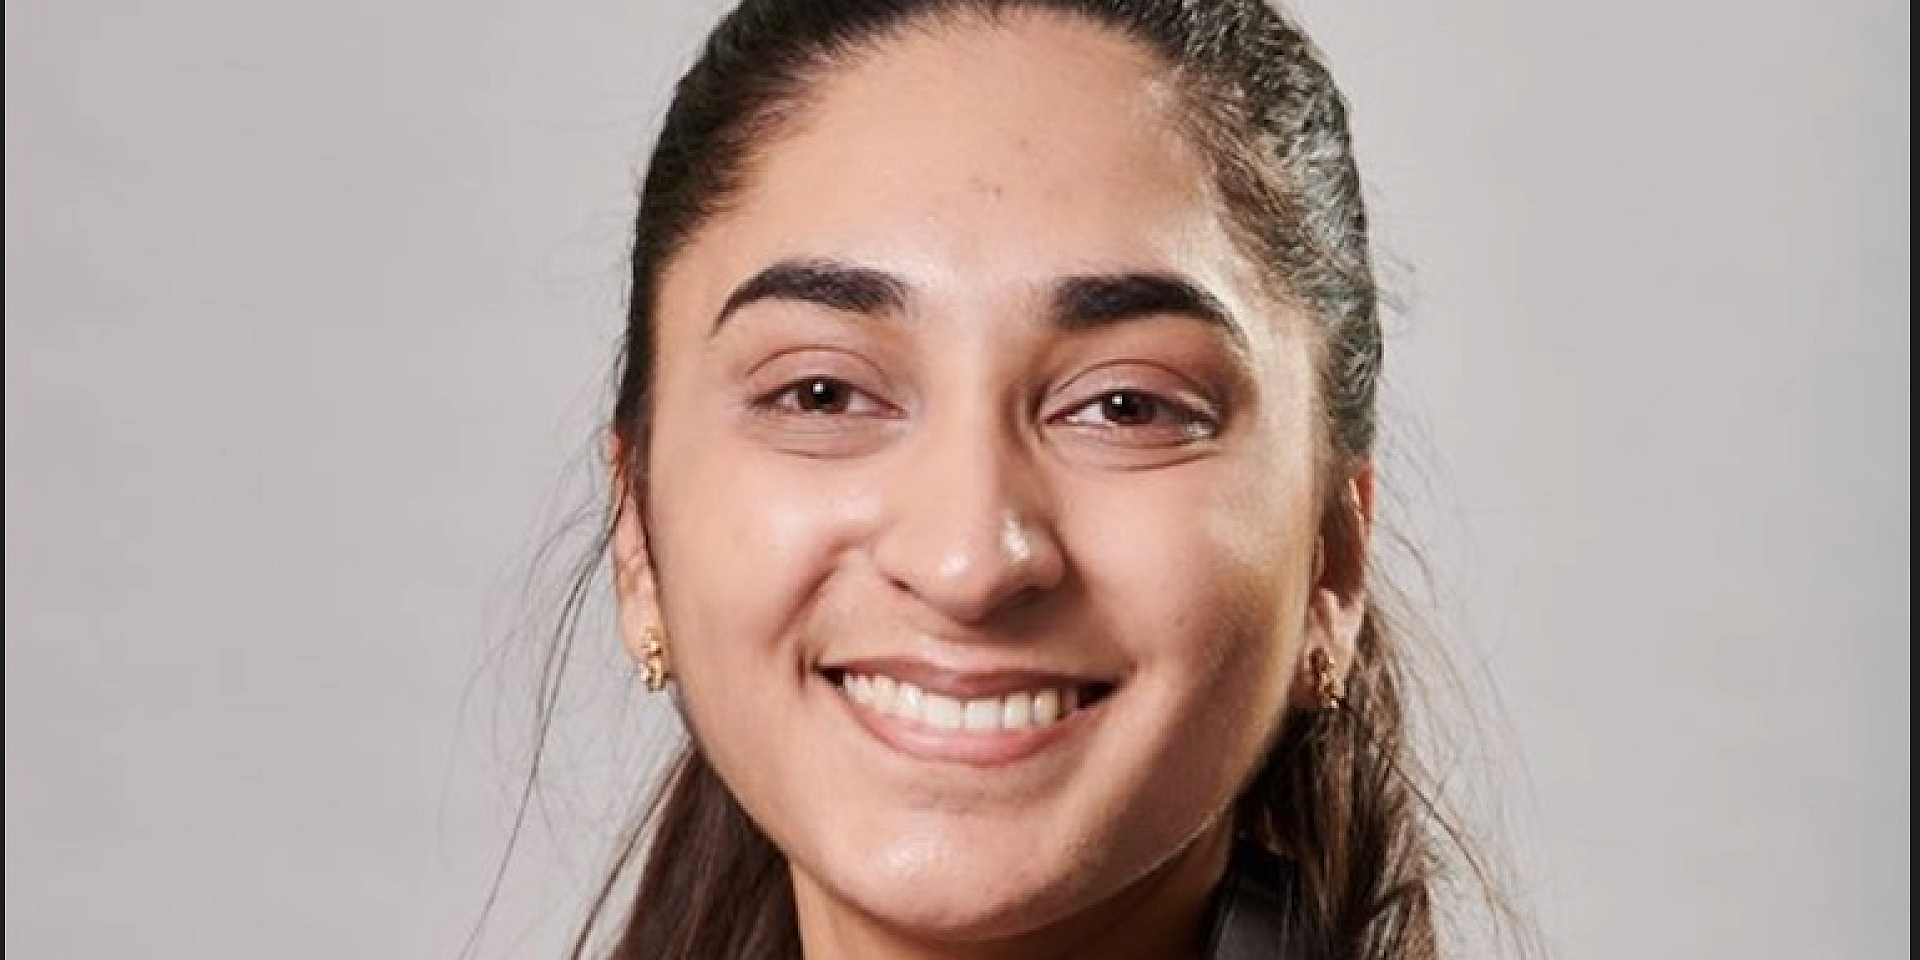 Maneesha Rakhra smiling in front of a grey background.